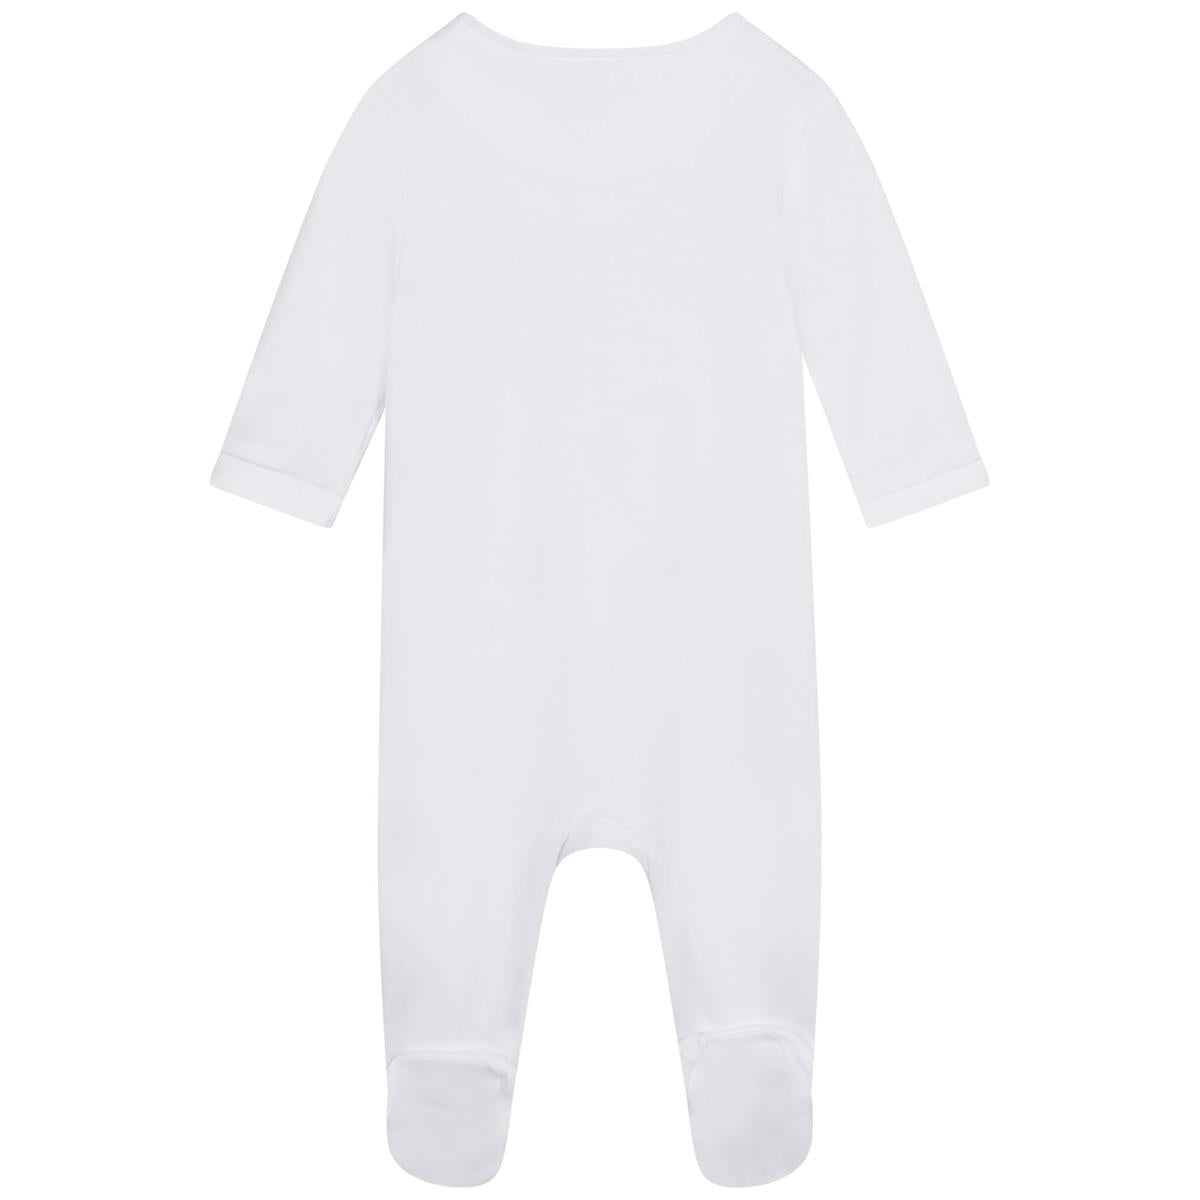 Baby Boys White Printed Babysuit